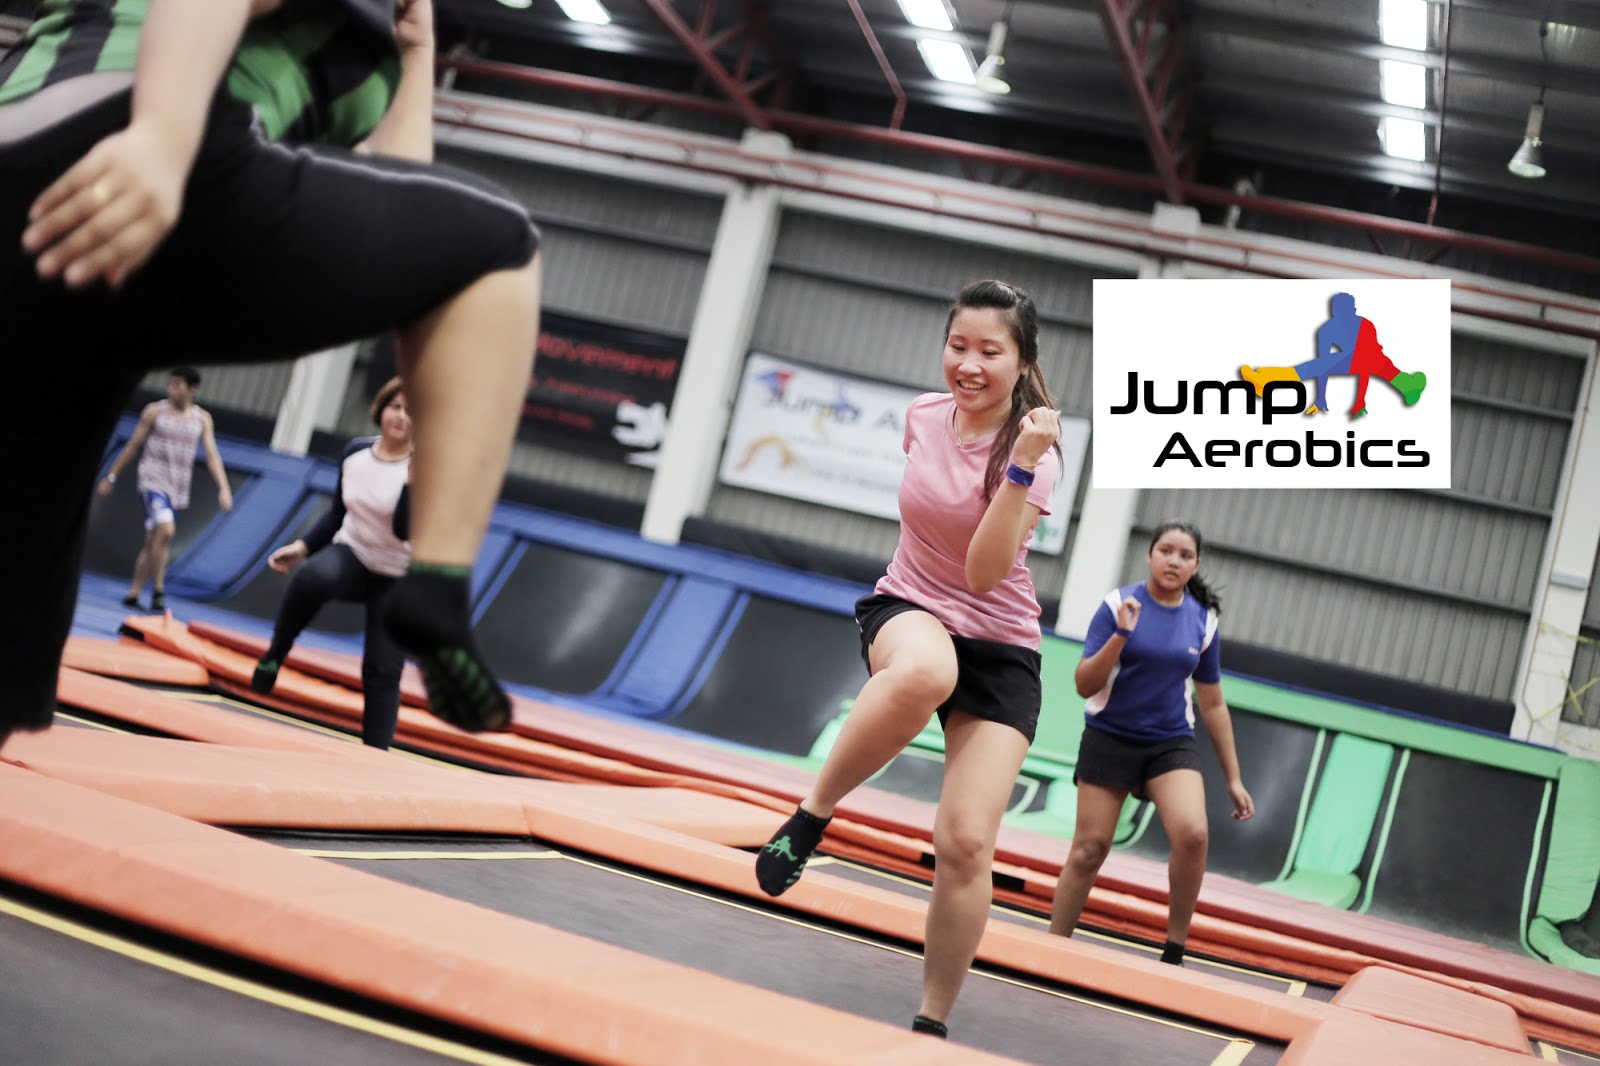 Jump Street Asia  Malaysia's Biggest Indoor Trampoline Park